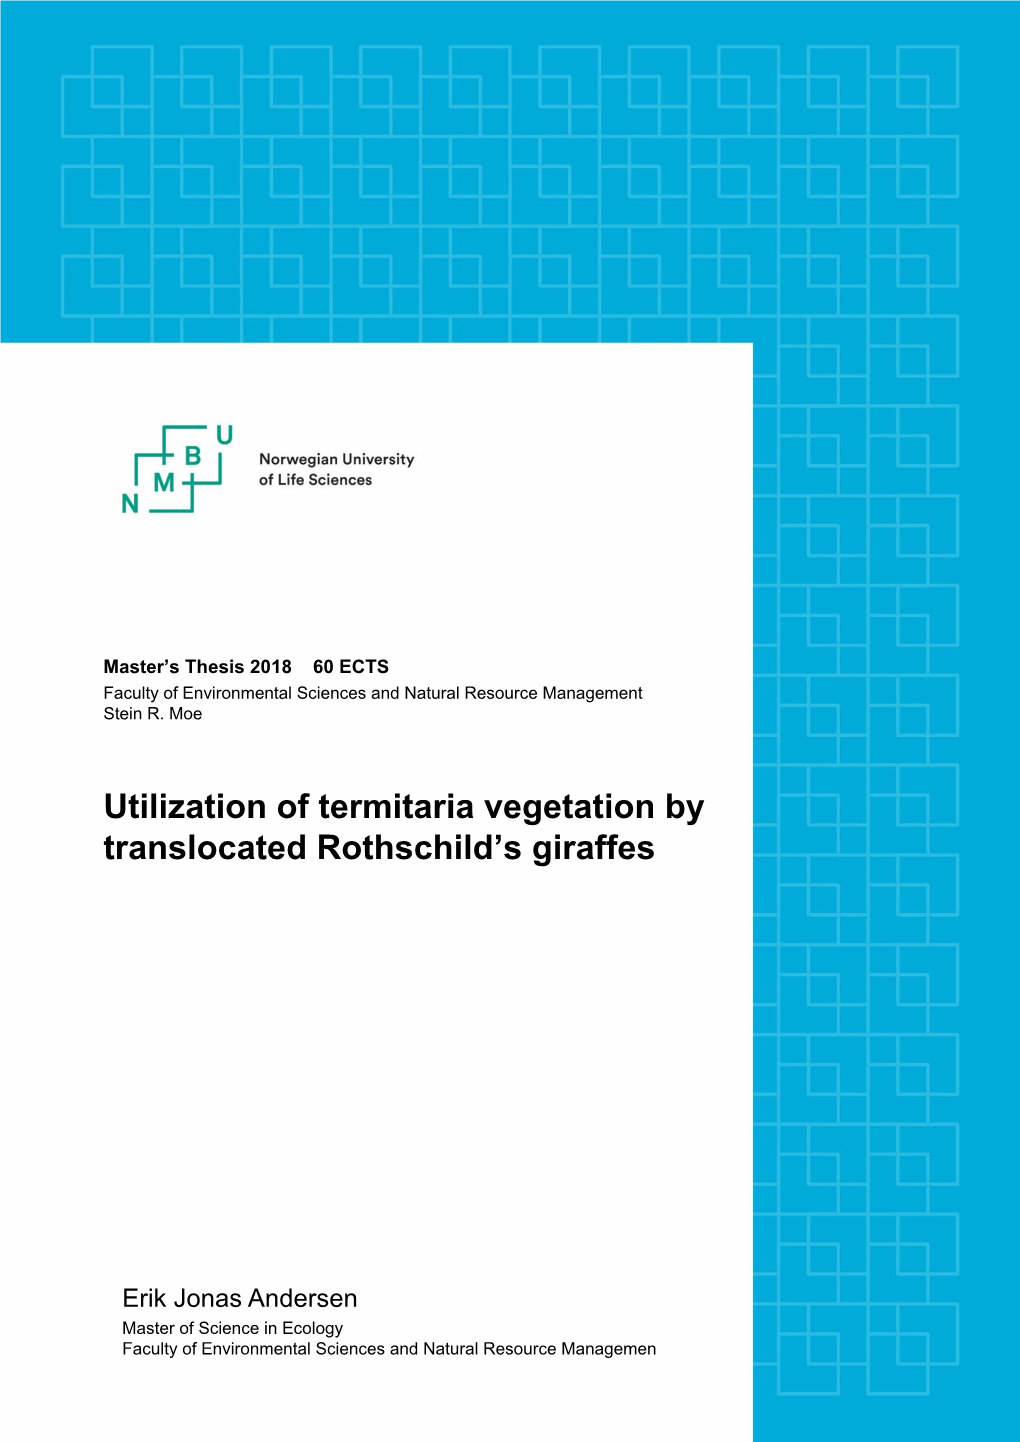 Utilization of Termitaria Vegetation by Translocated Rothschild's Giraffes